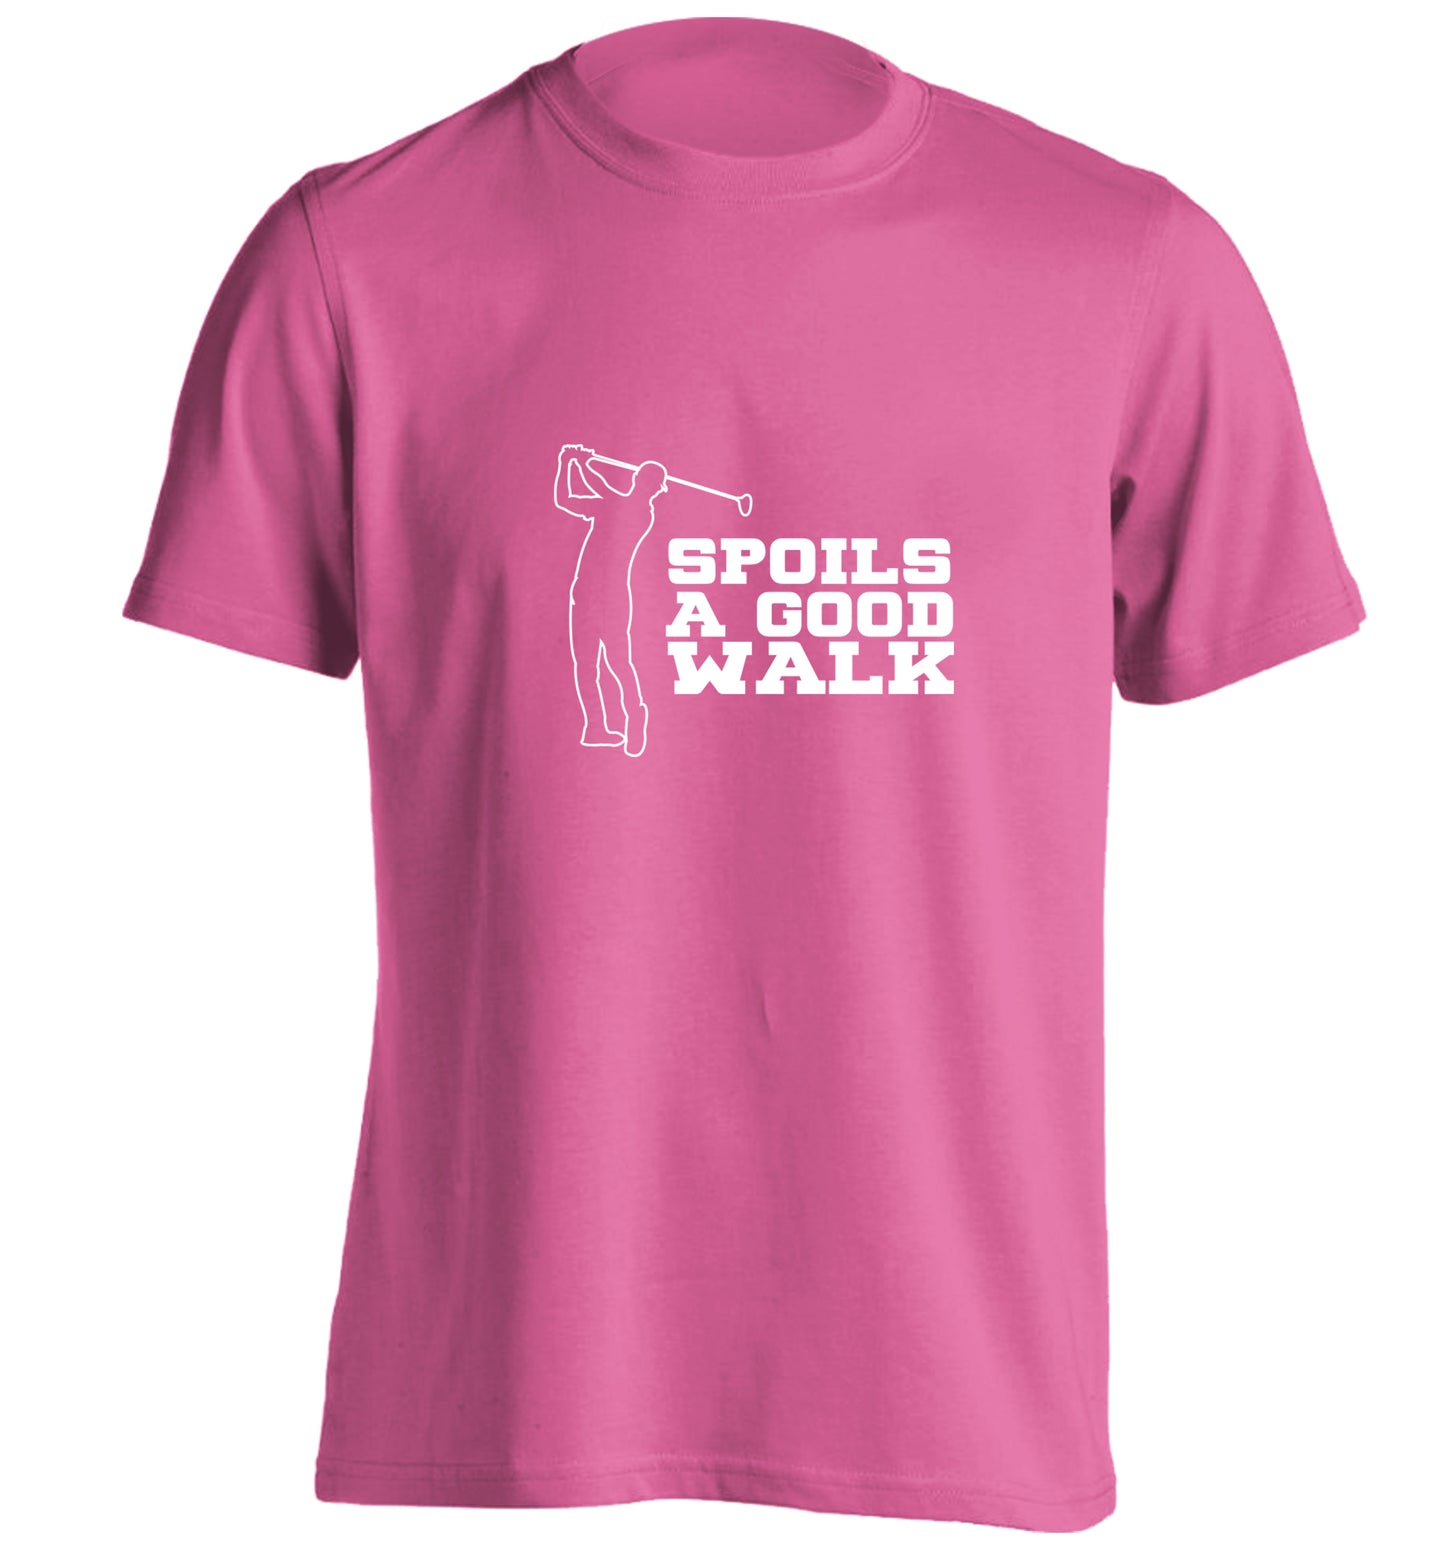 Golf spoils a good walk adults unisex pink Tshirt 2XL